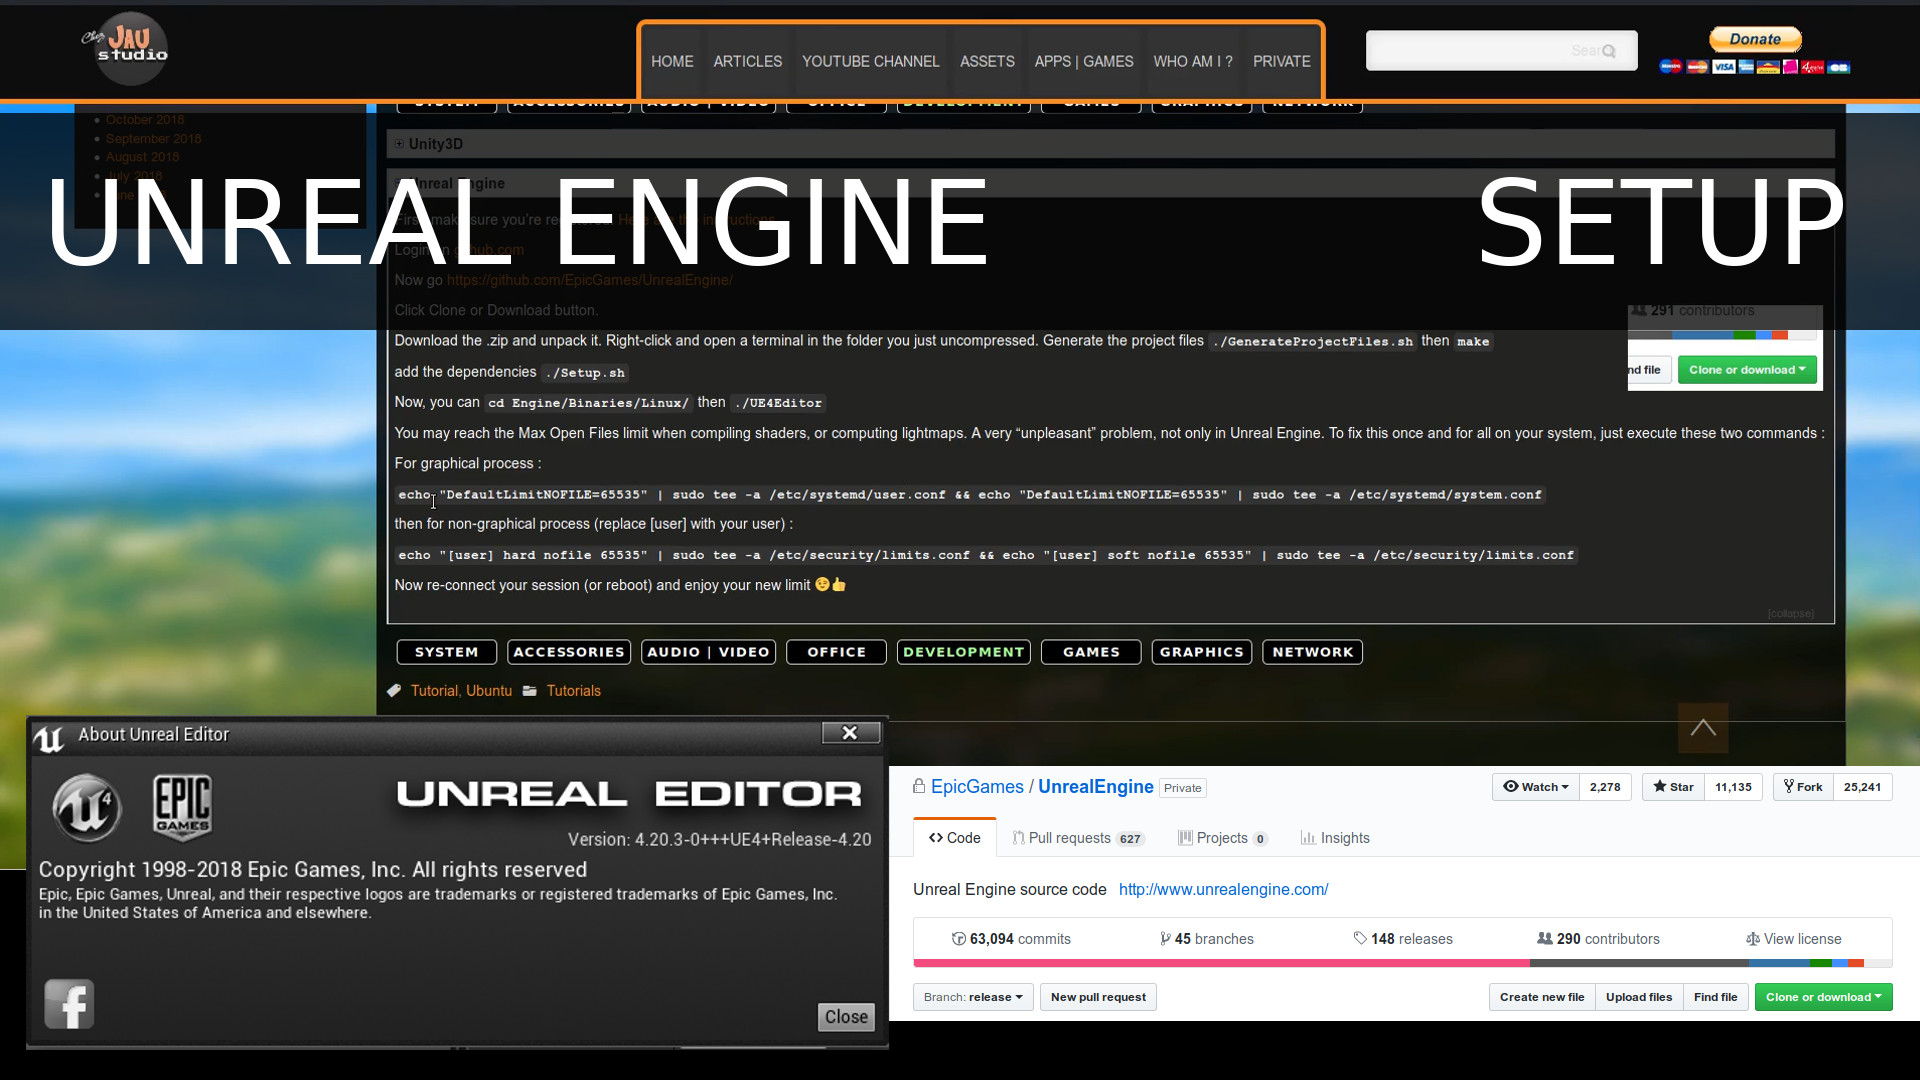 Install Unreal Engine 4 Editor on Linux